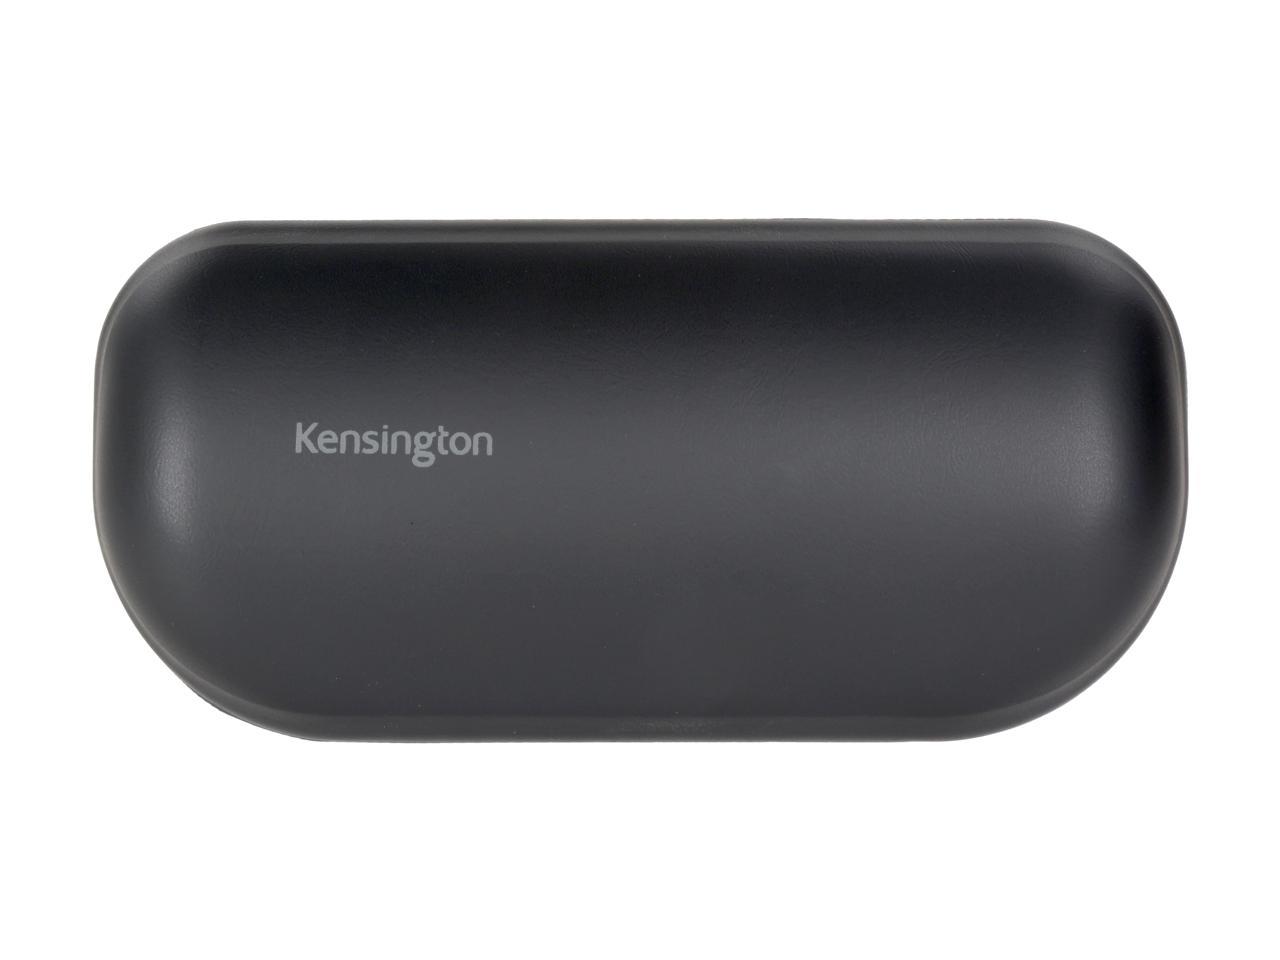 Kensington K52802WW ErgoSoft Wrist Rest for Standard Mouse